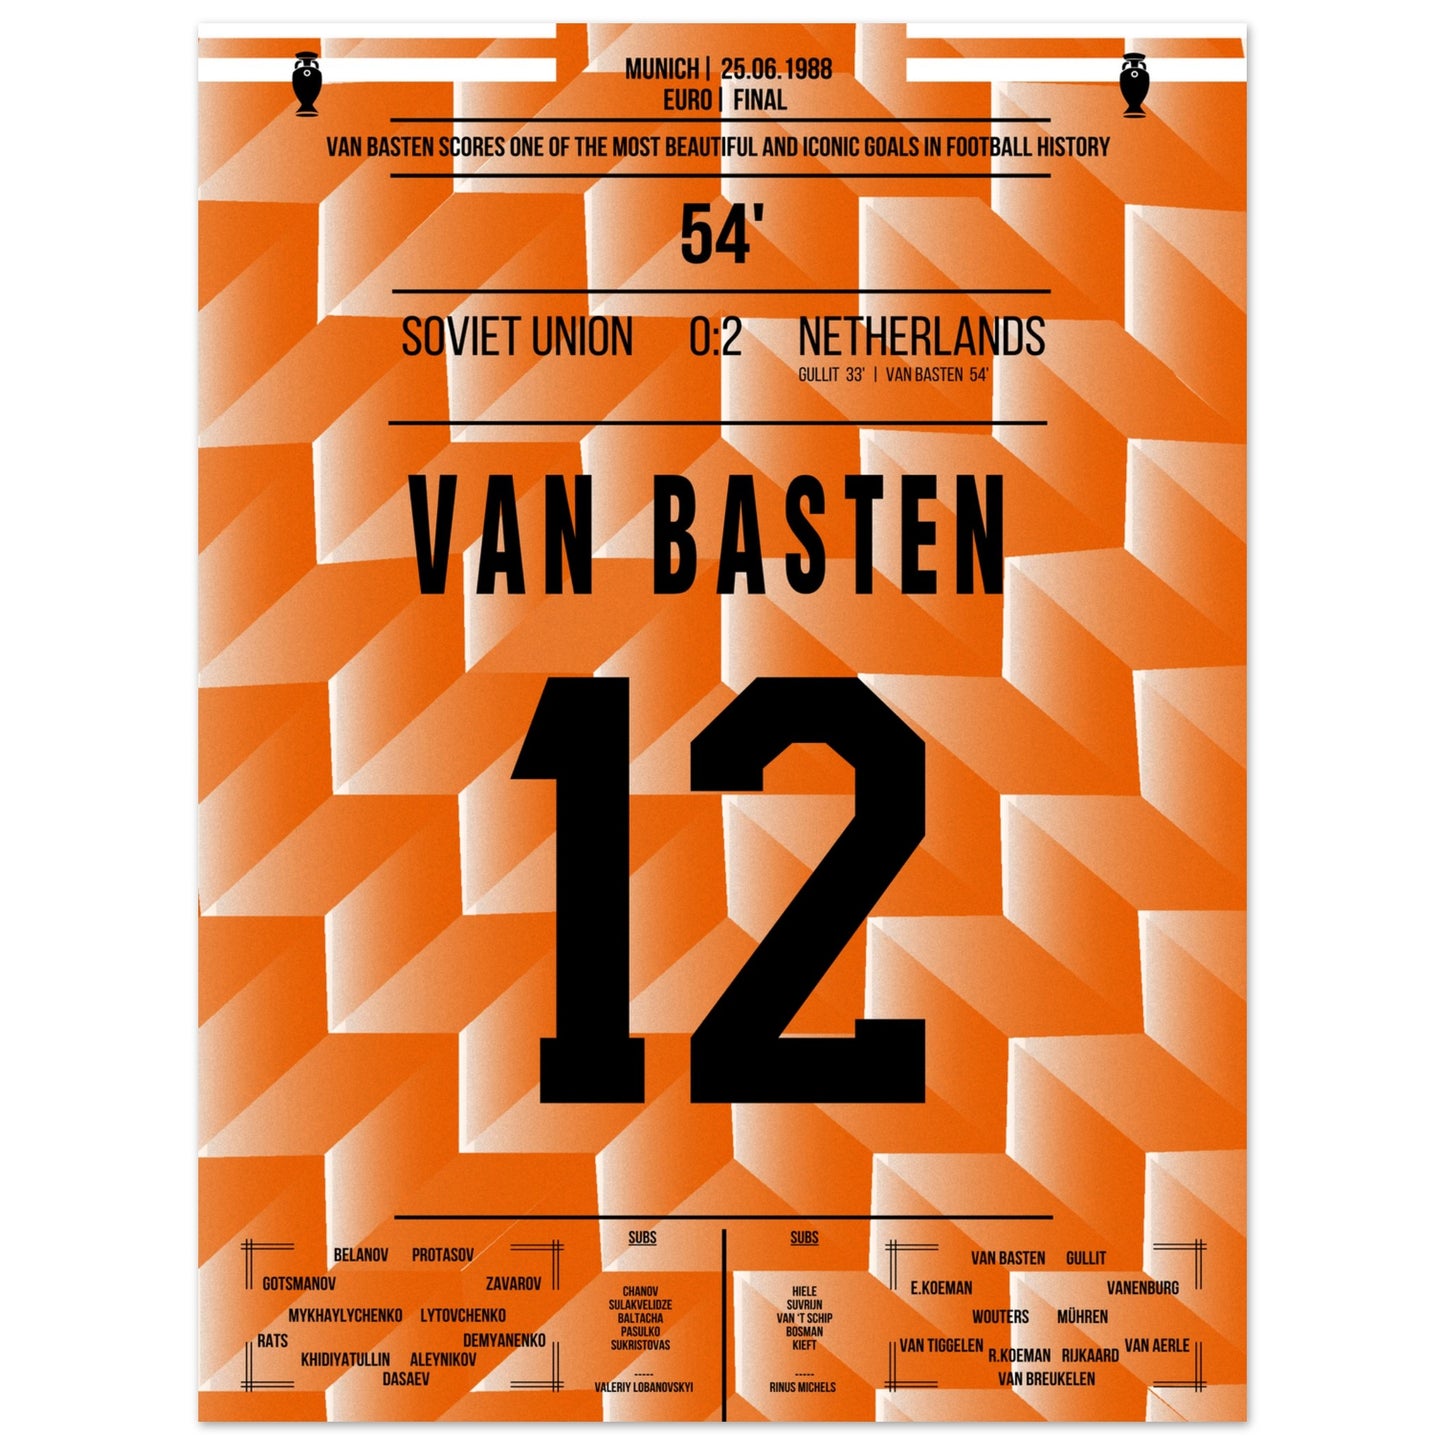 Van Basten's berühmtes Tor im Finale der Euro 1988